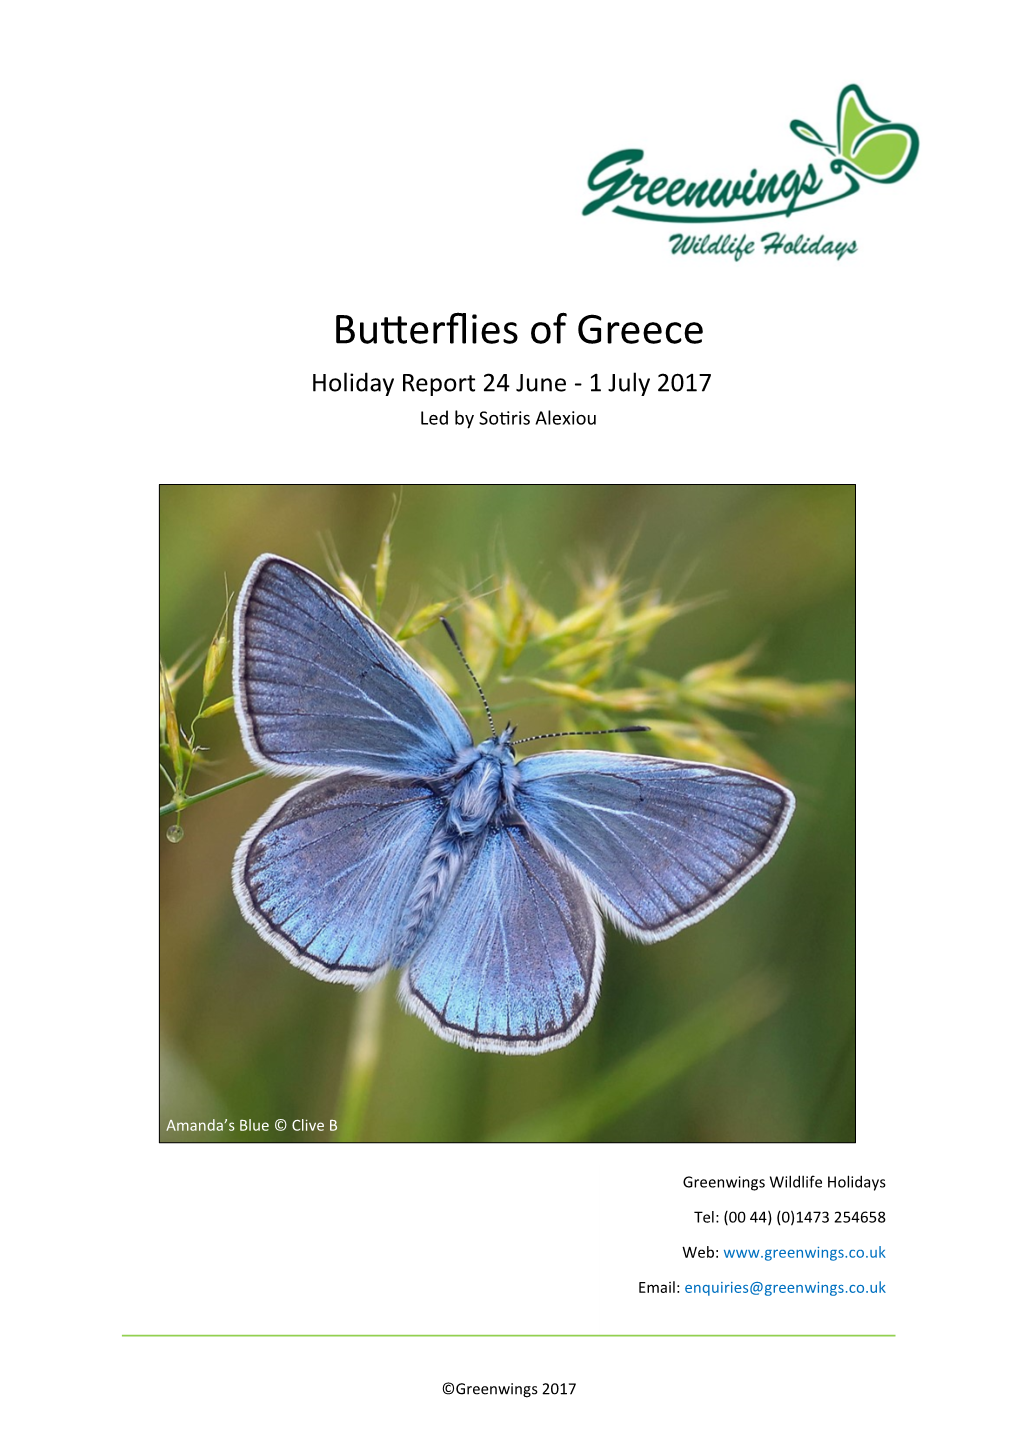 Butterflies of Greece Holiday Report 2017